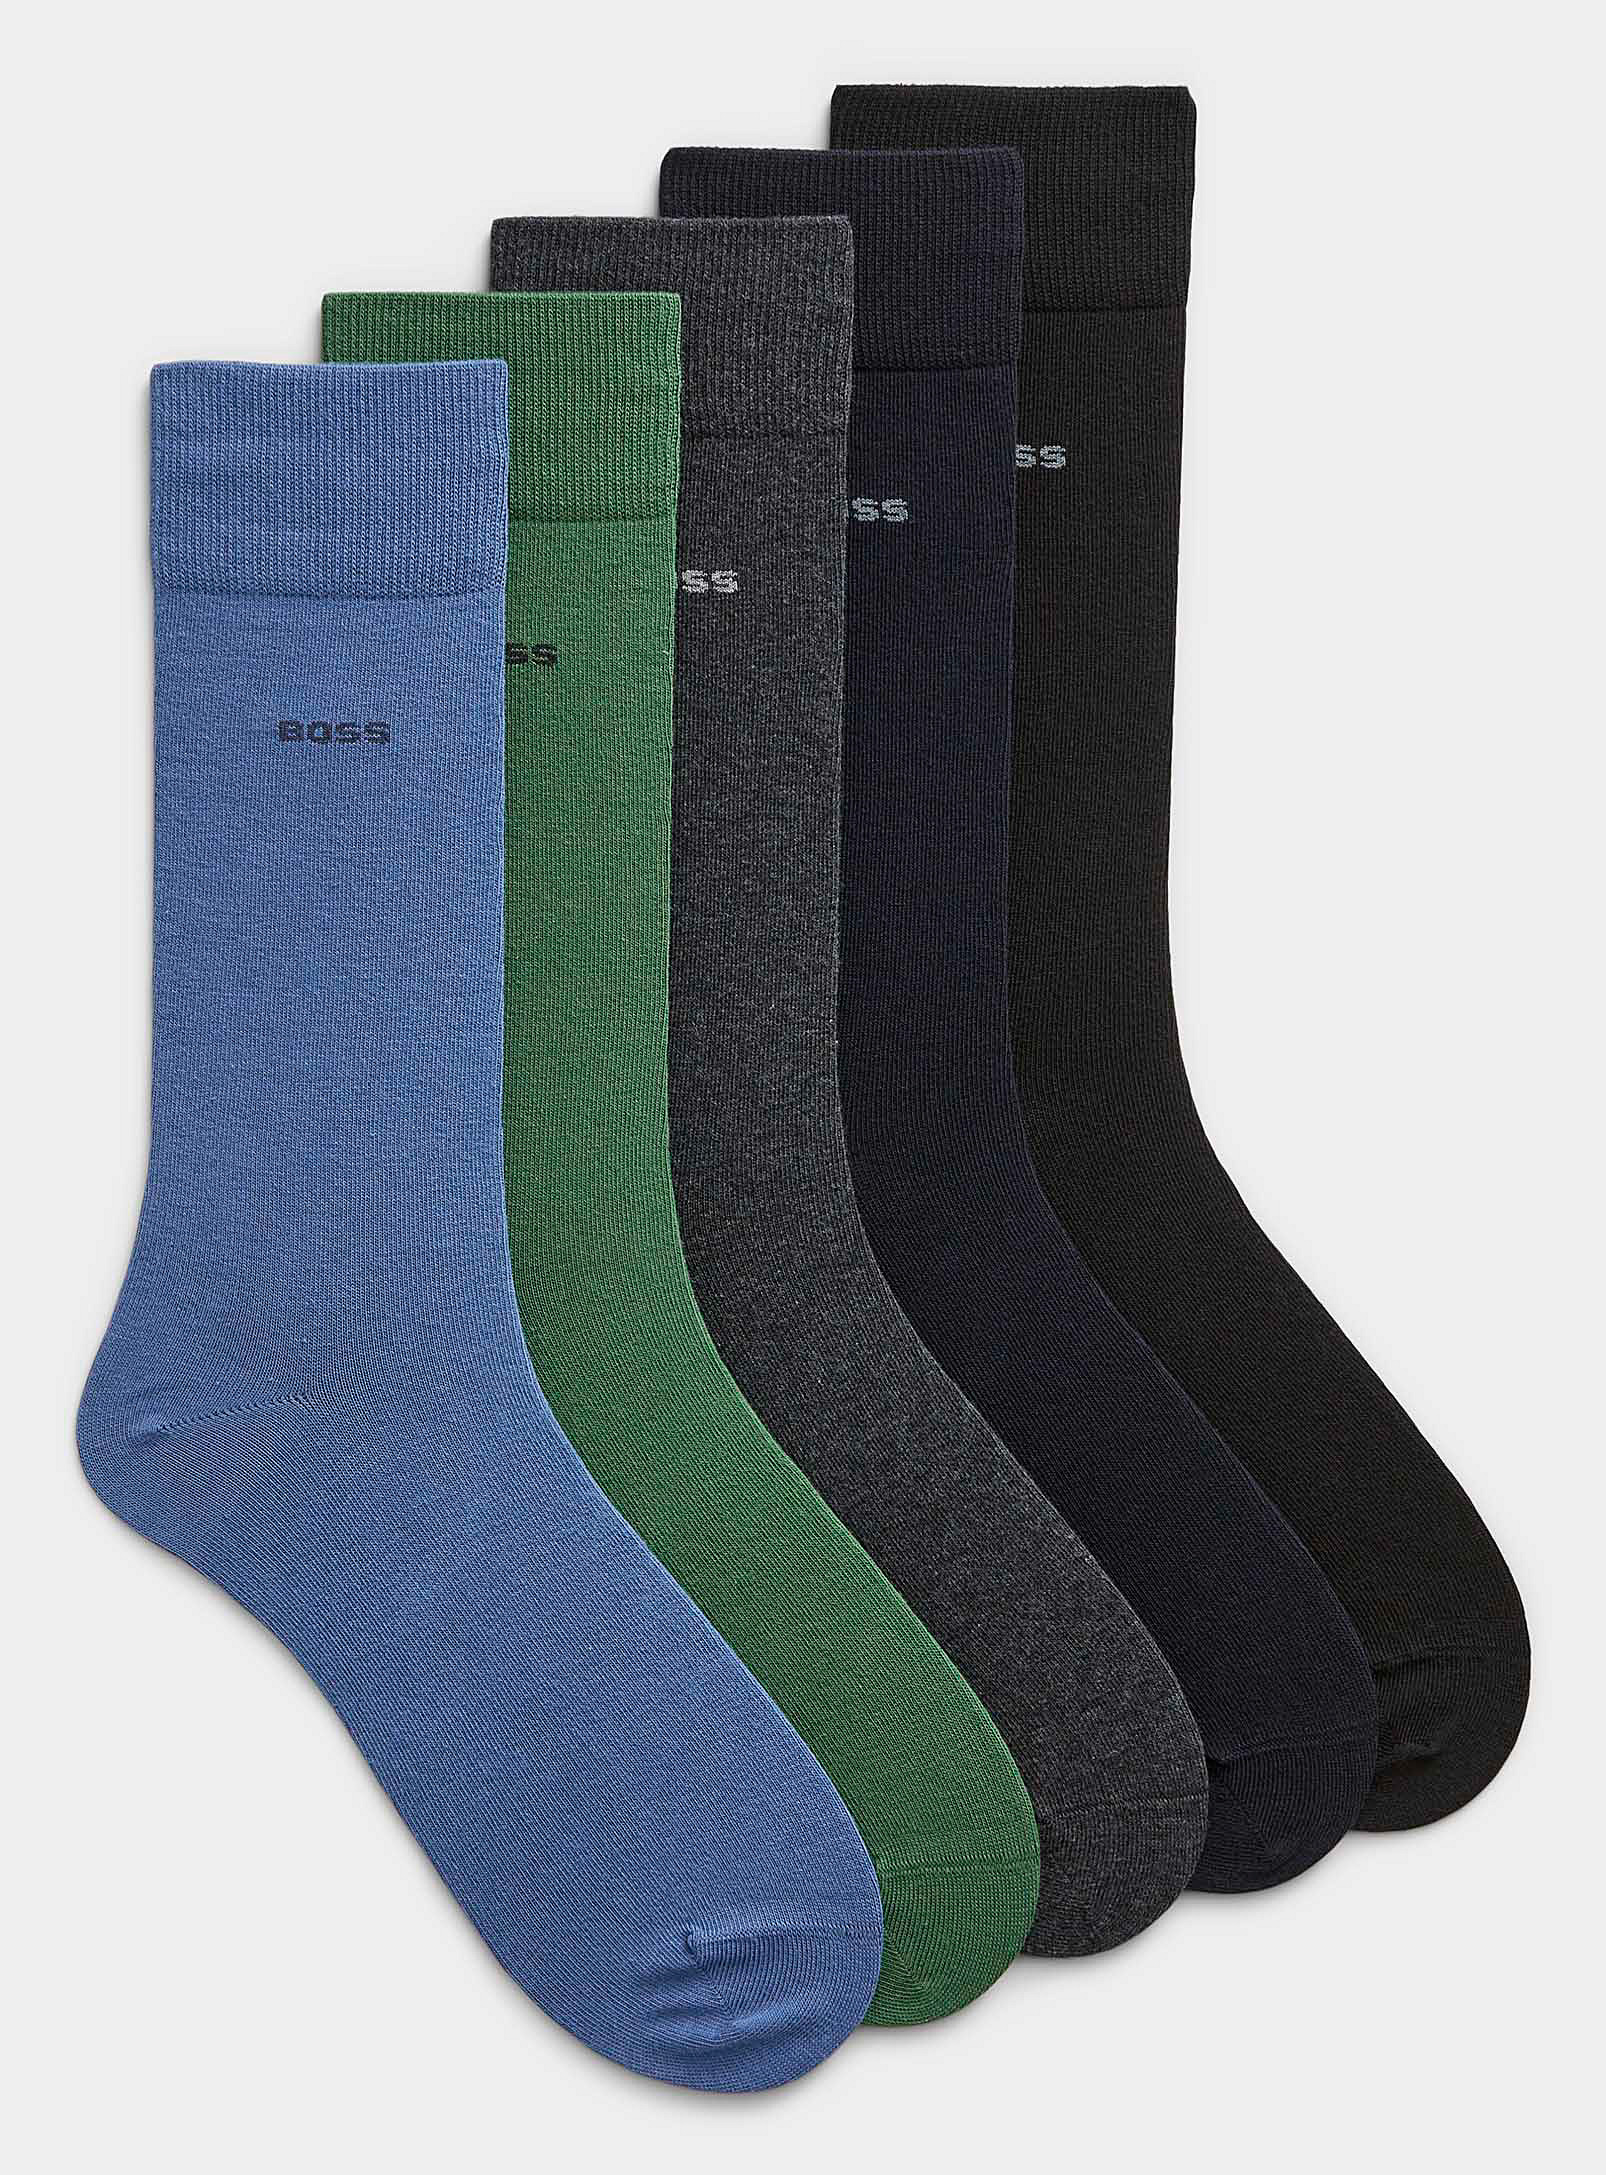 Hugo Boss Solid Dress Socks 5-pack In Assorted